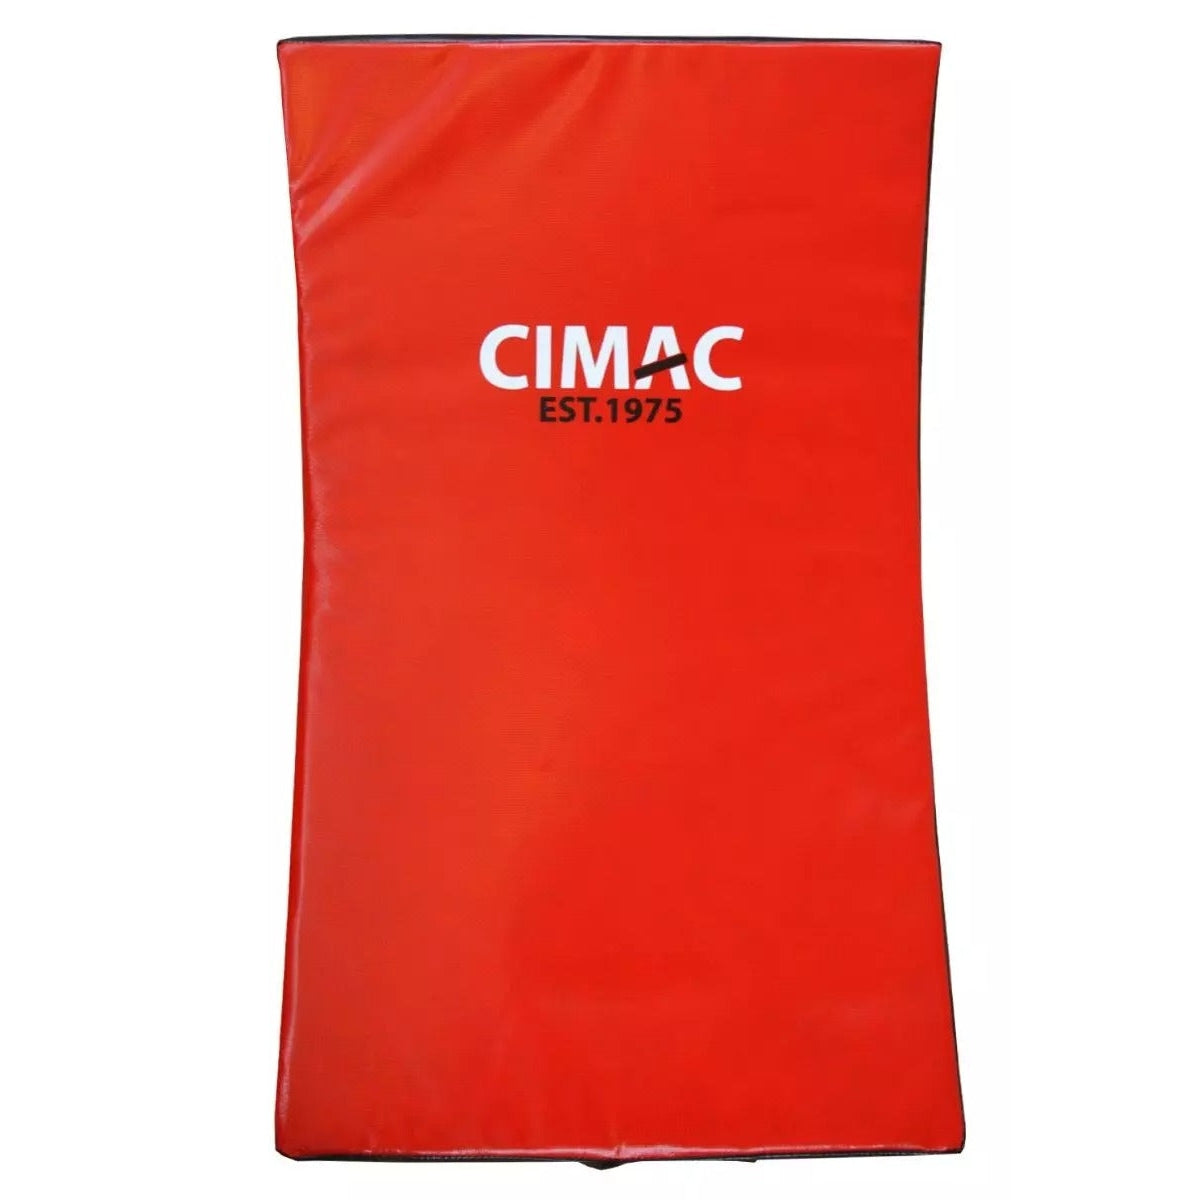 Cimac XL Curved Strike Shield Martial Arts Kick Pads